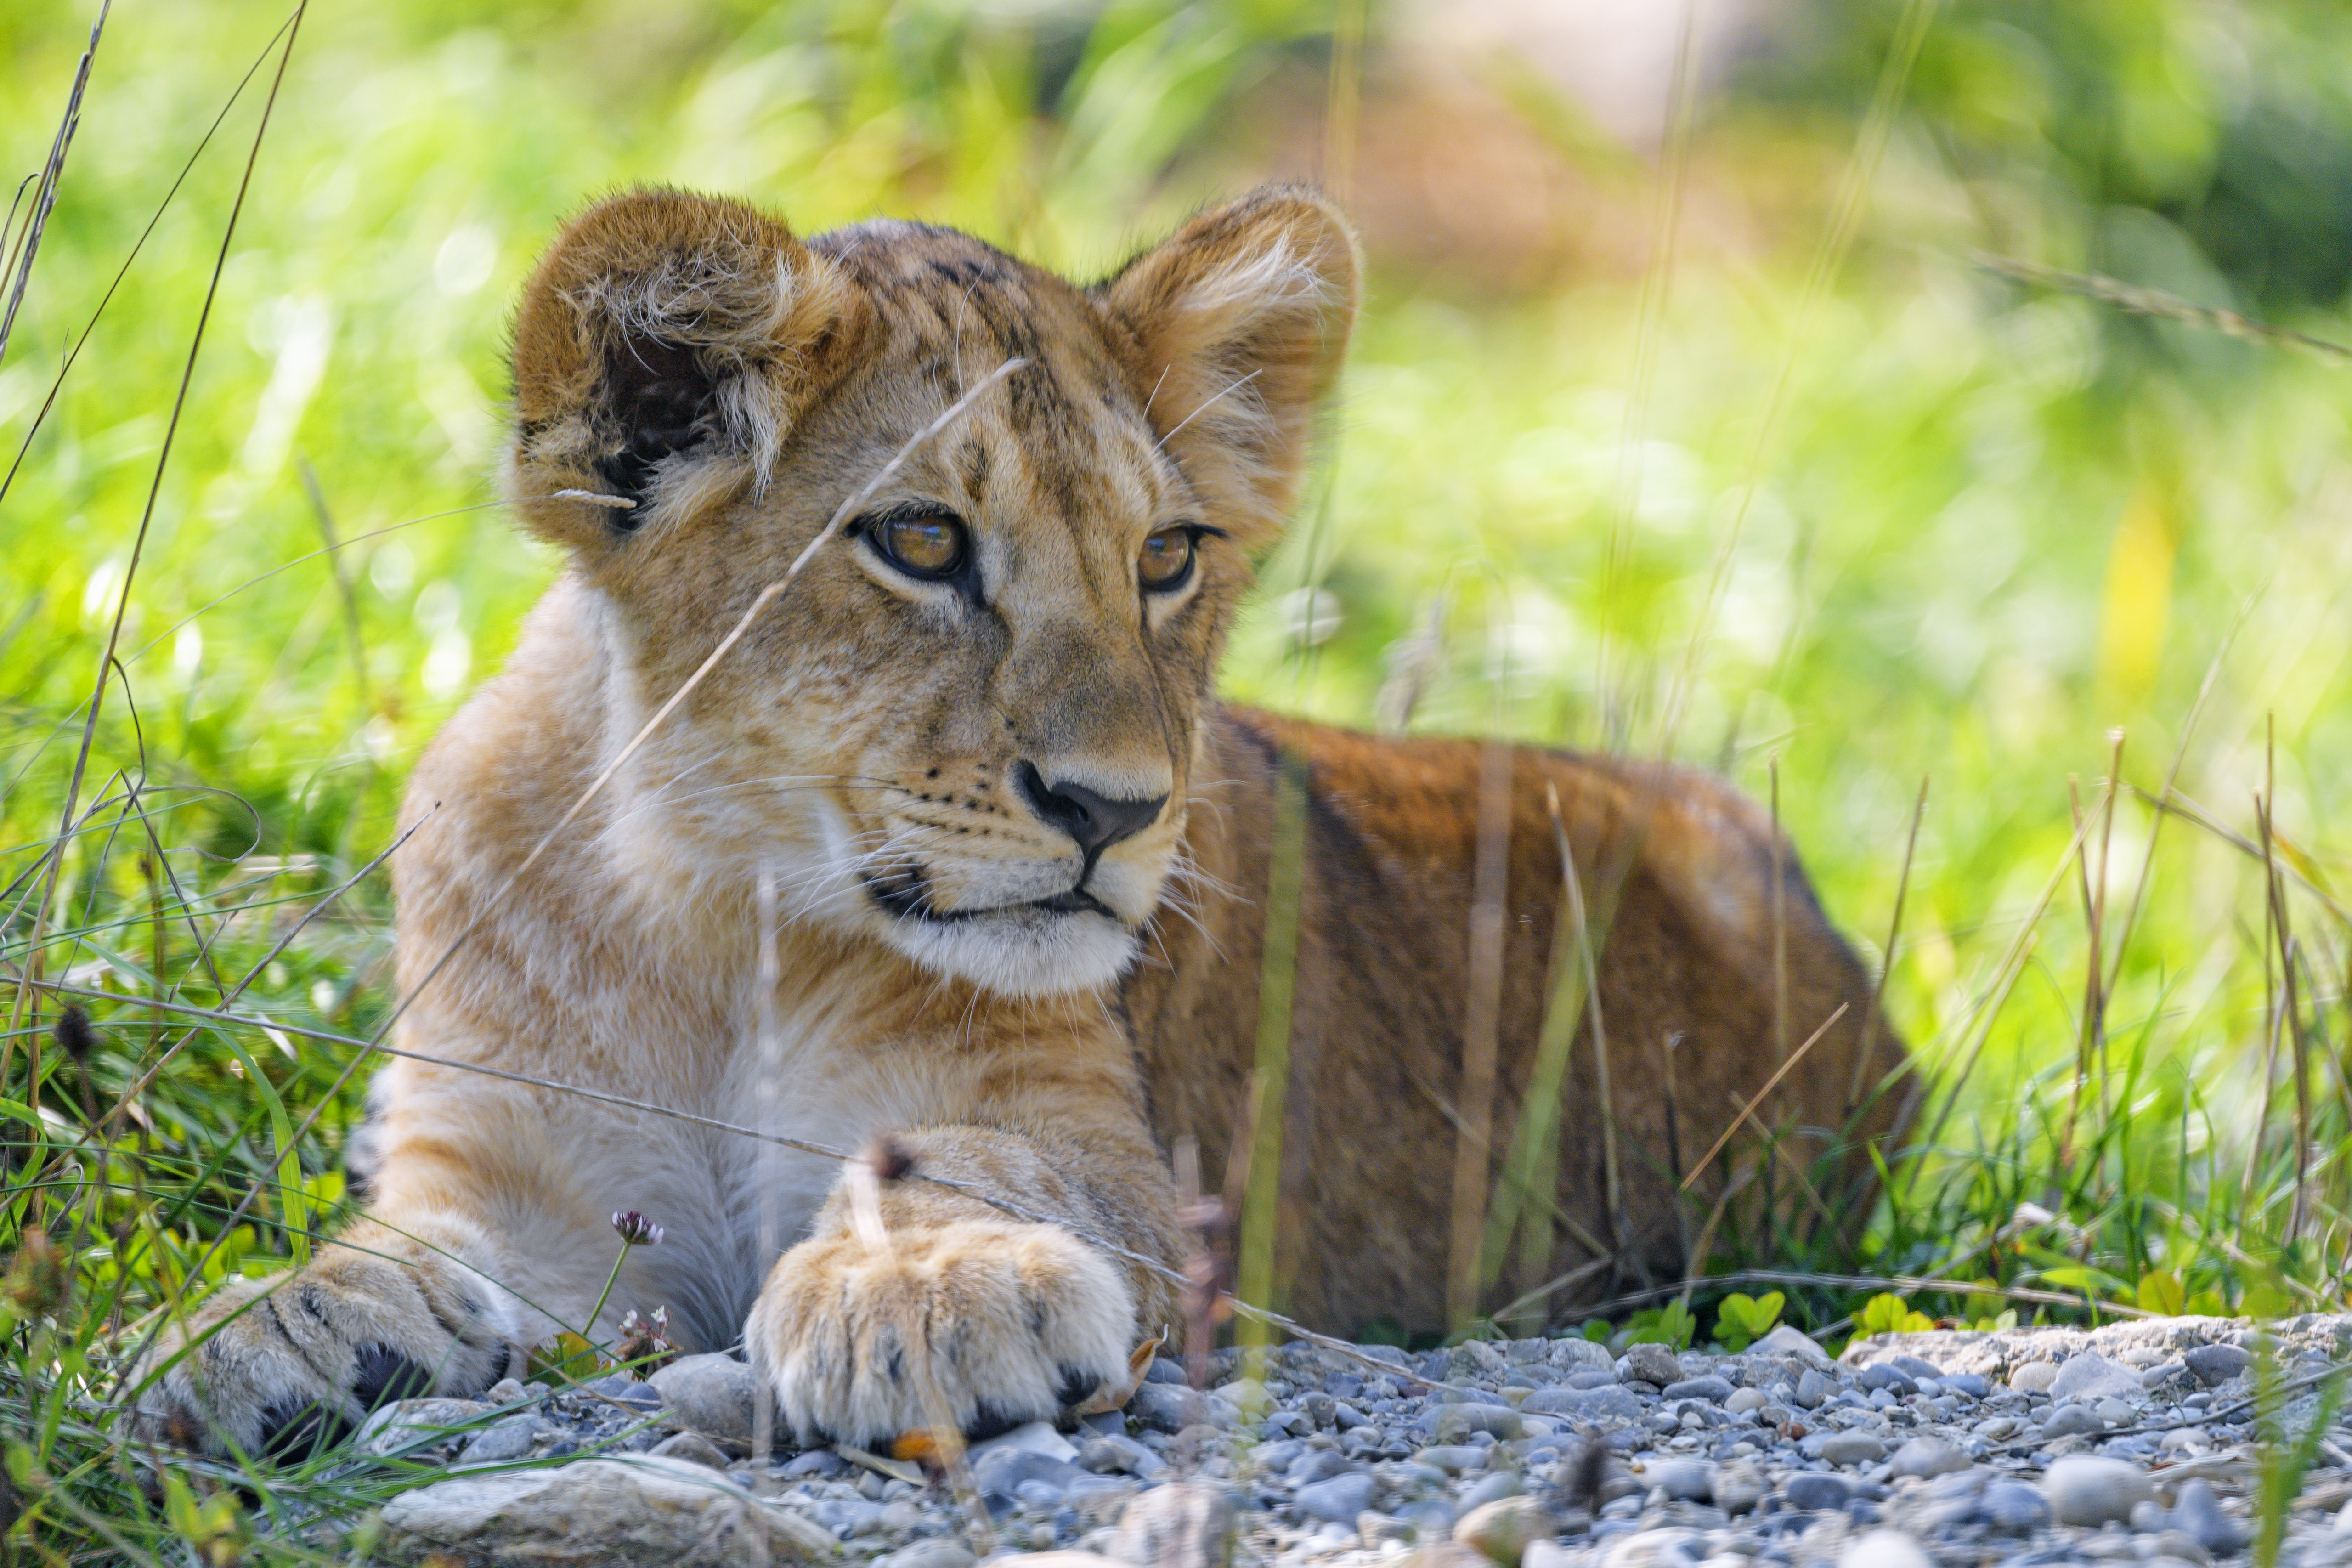 lion cub, animals, grass, young, lion, predator, sight, opinion, joey